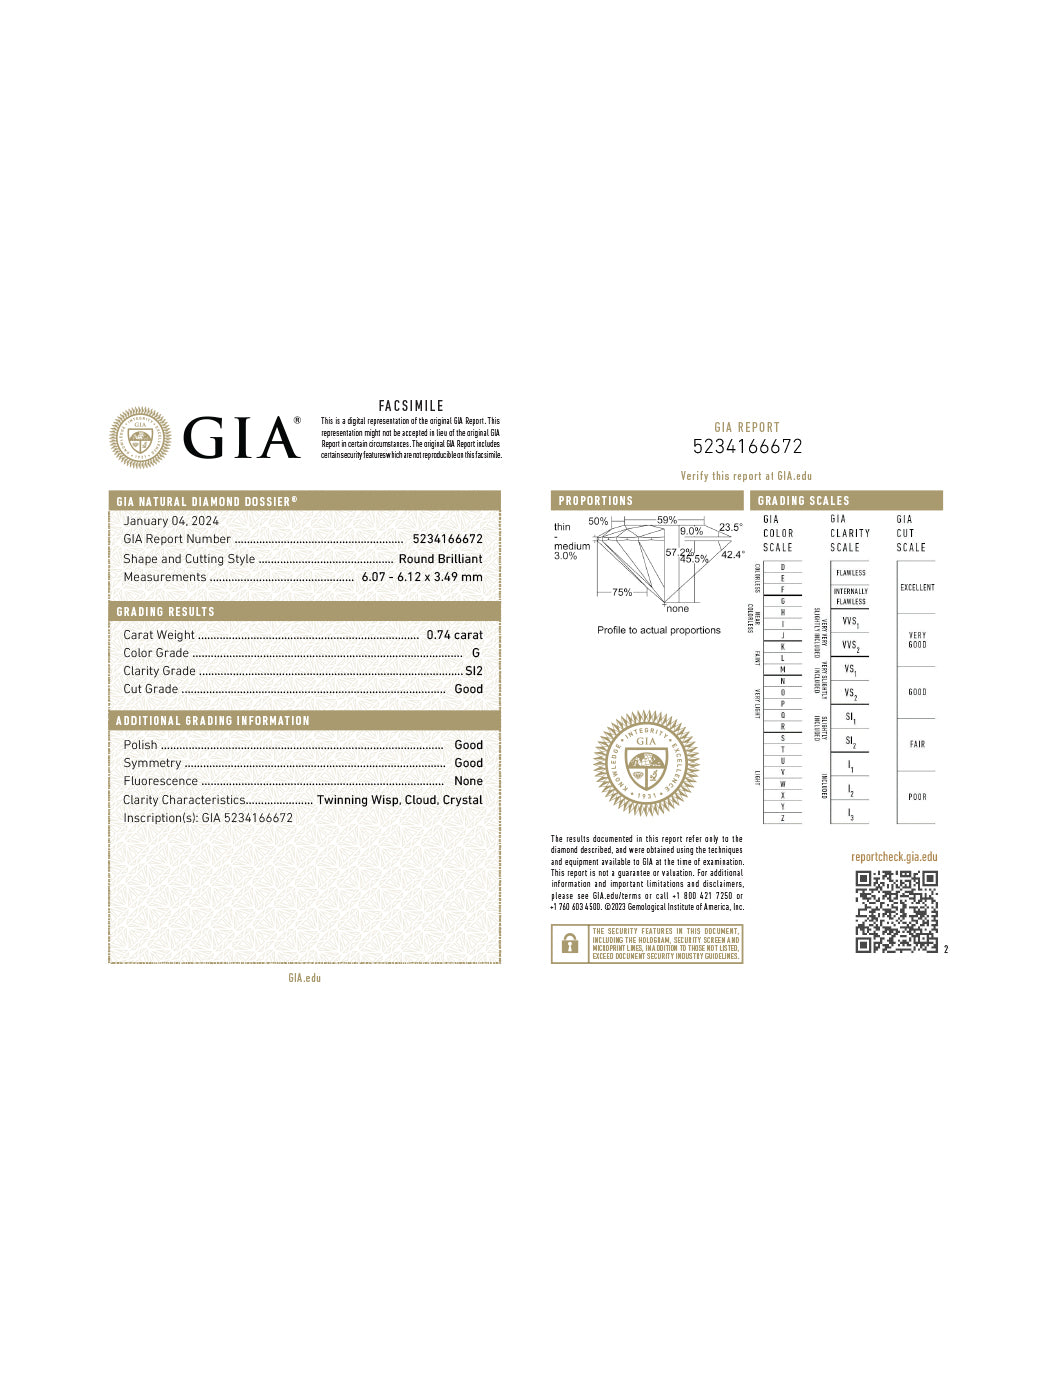 14Kt Engagement Diamond Ring GIA Certified .74 Carat Round SI2-G